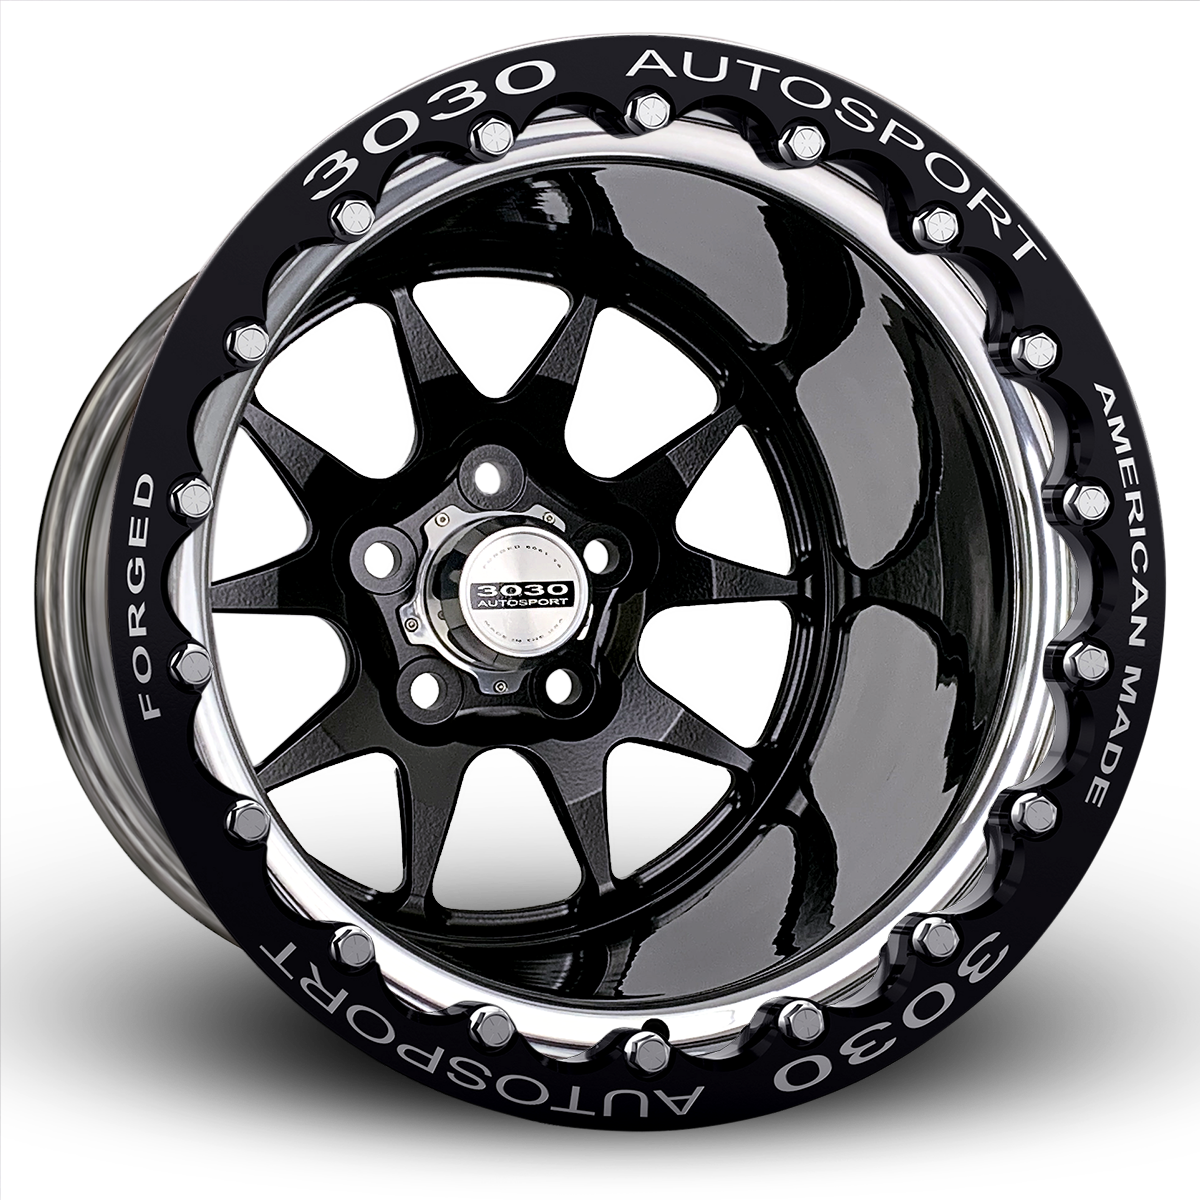 MACH-10 Double-Beadlock Wheel, Size: 15x9", Bolt Pattern: 5x4.5", Backspace: 4" [Black/Polished]